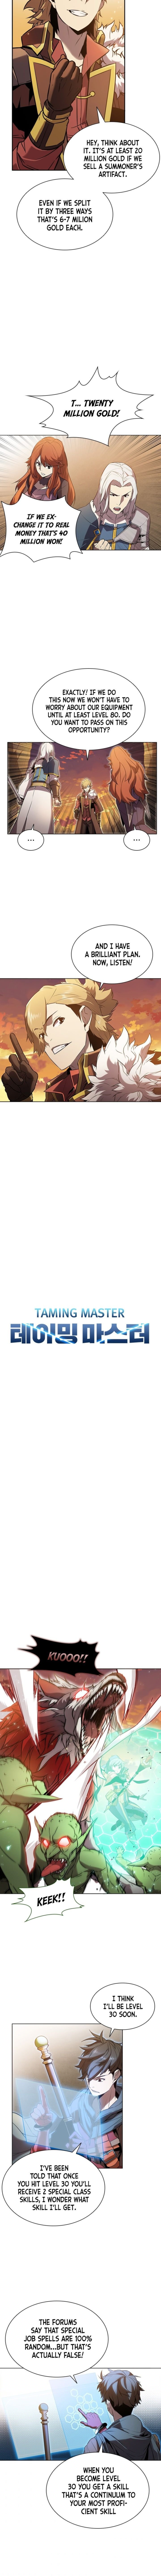 taming_master_10_3